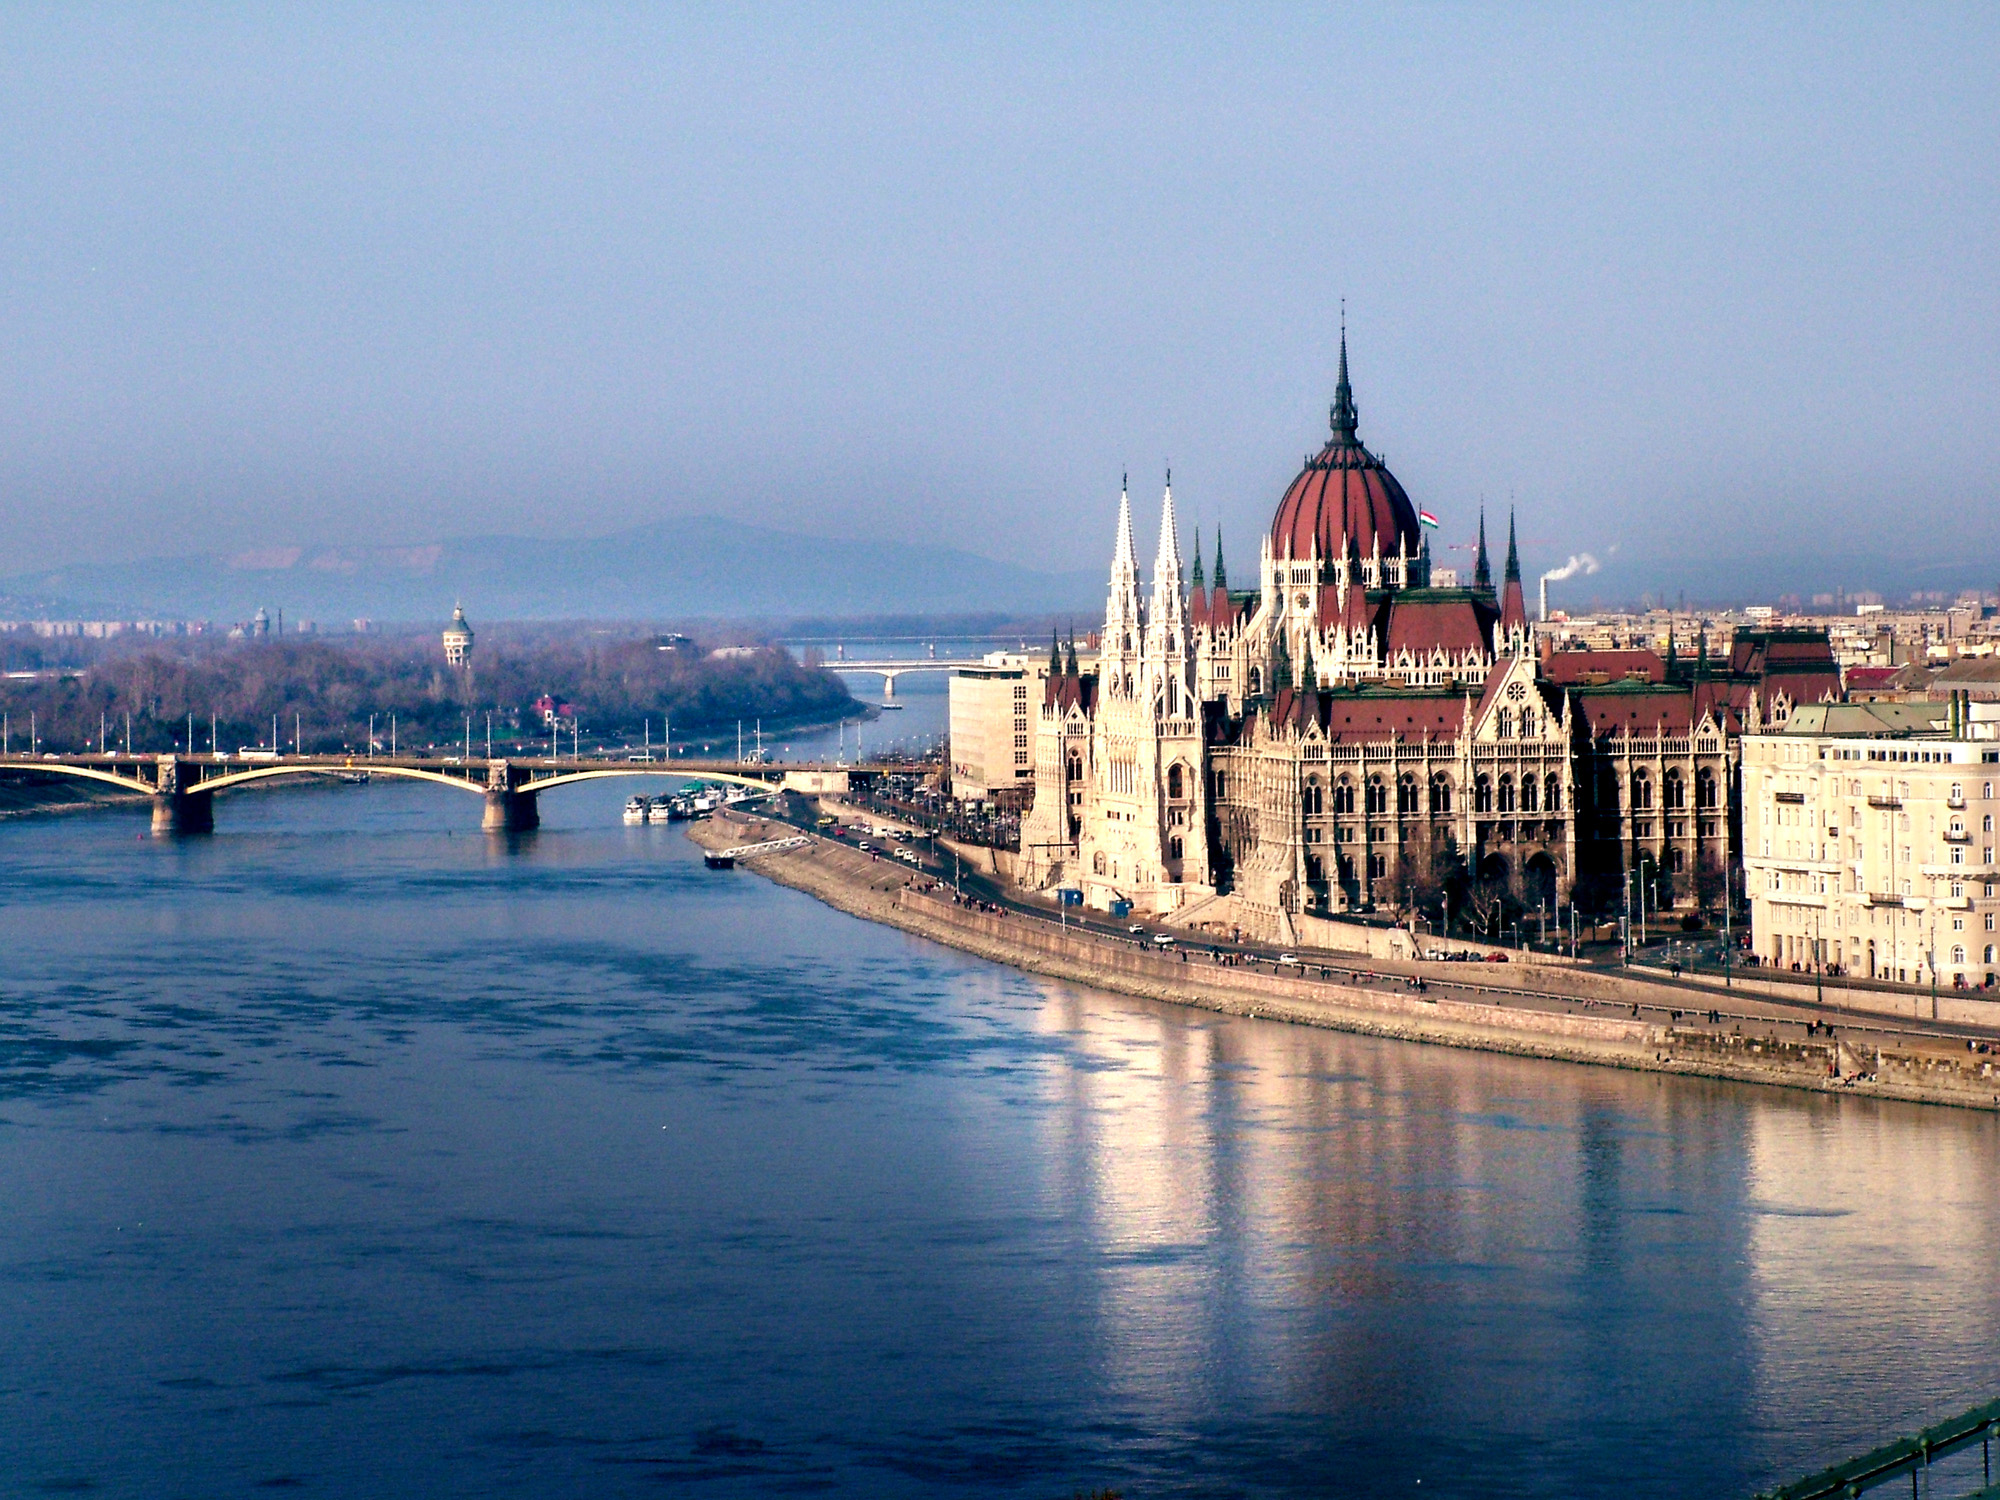 Будапешт. Будапешт Дунай. Будапешт парламент на Дунае. Будапешт Братислава. Венгрия столица Будапешт.